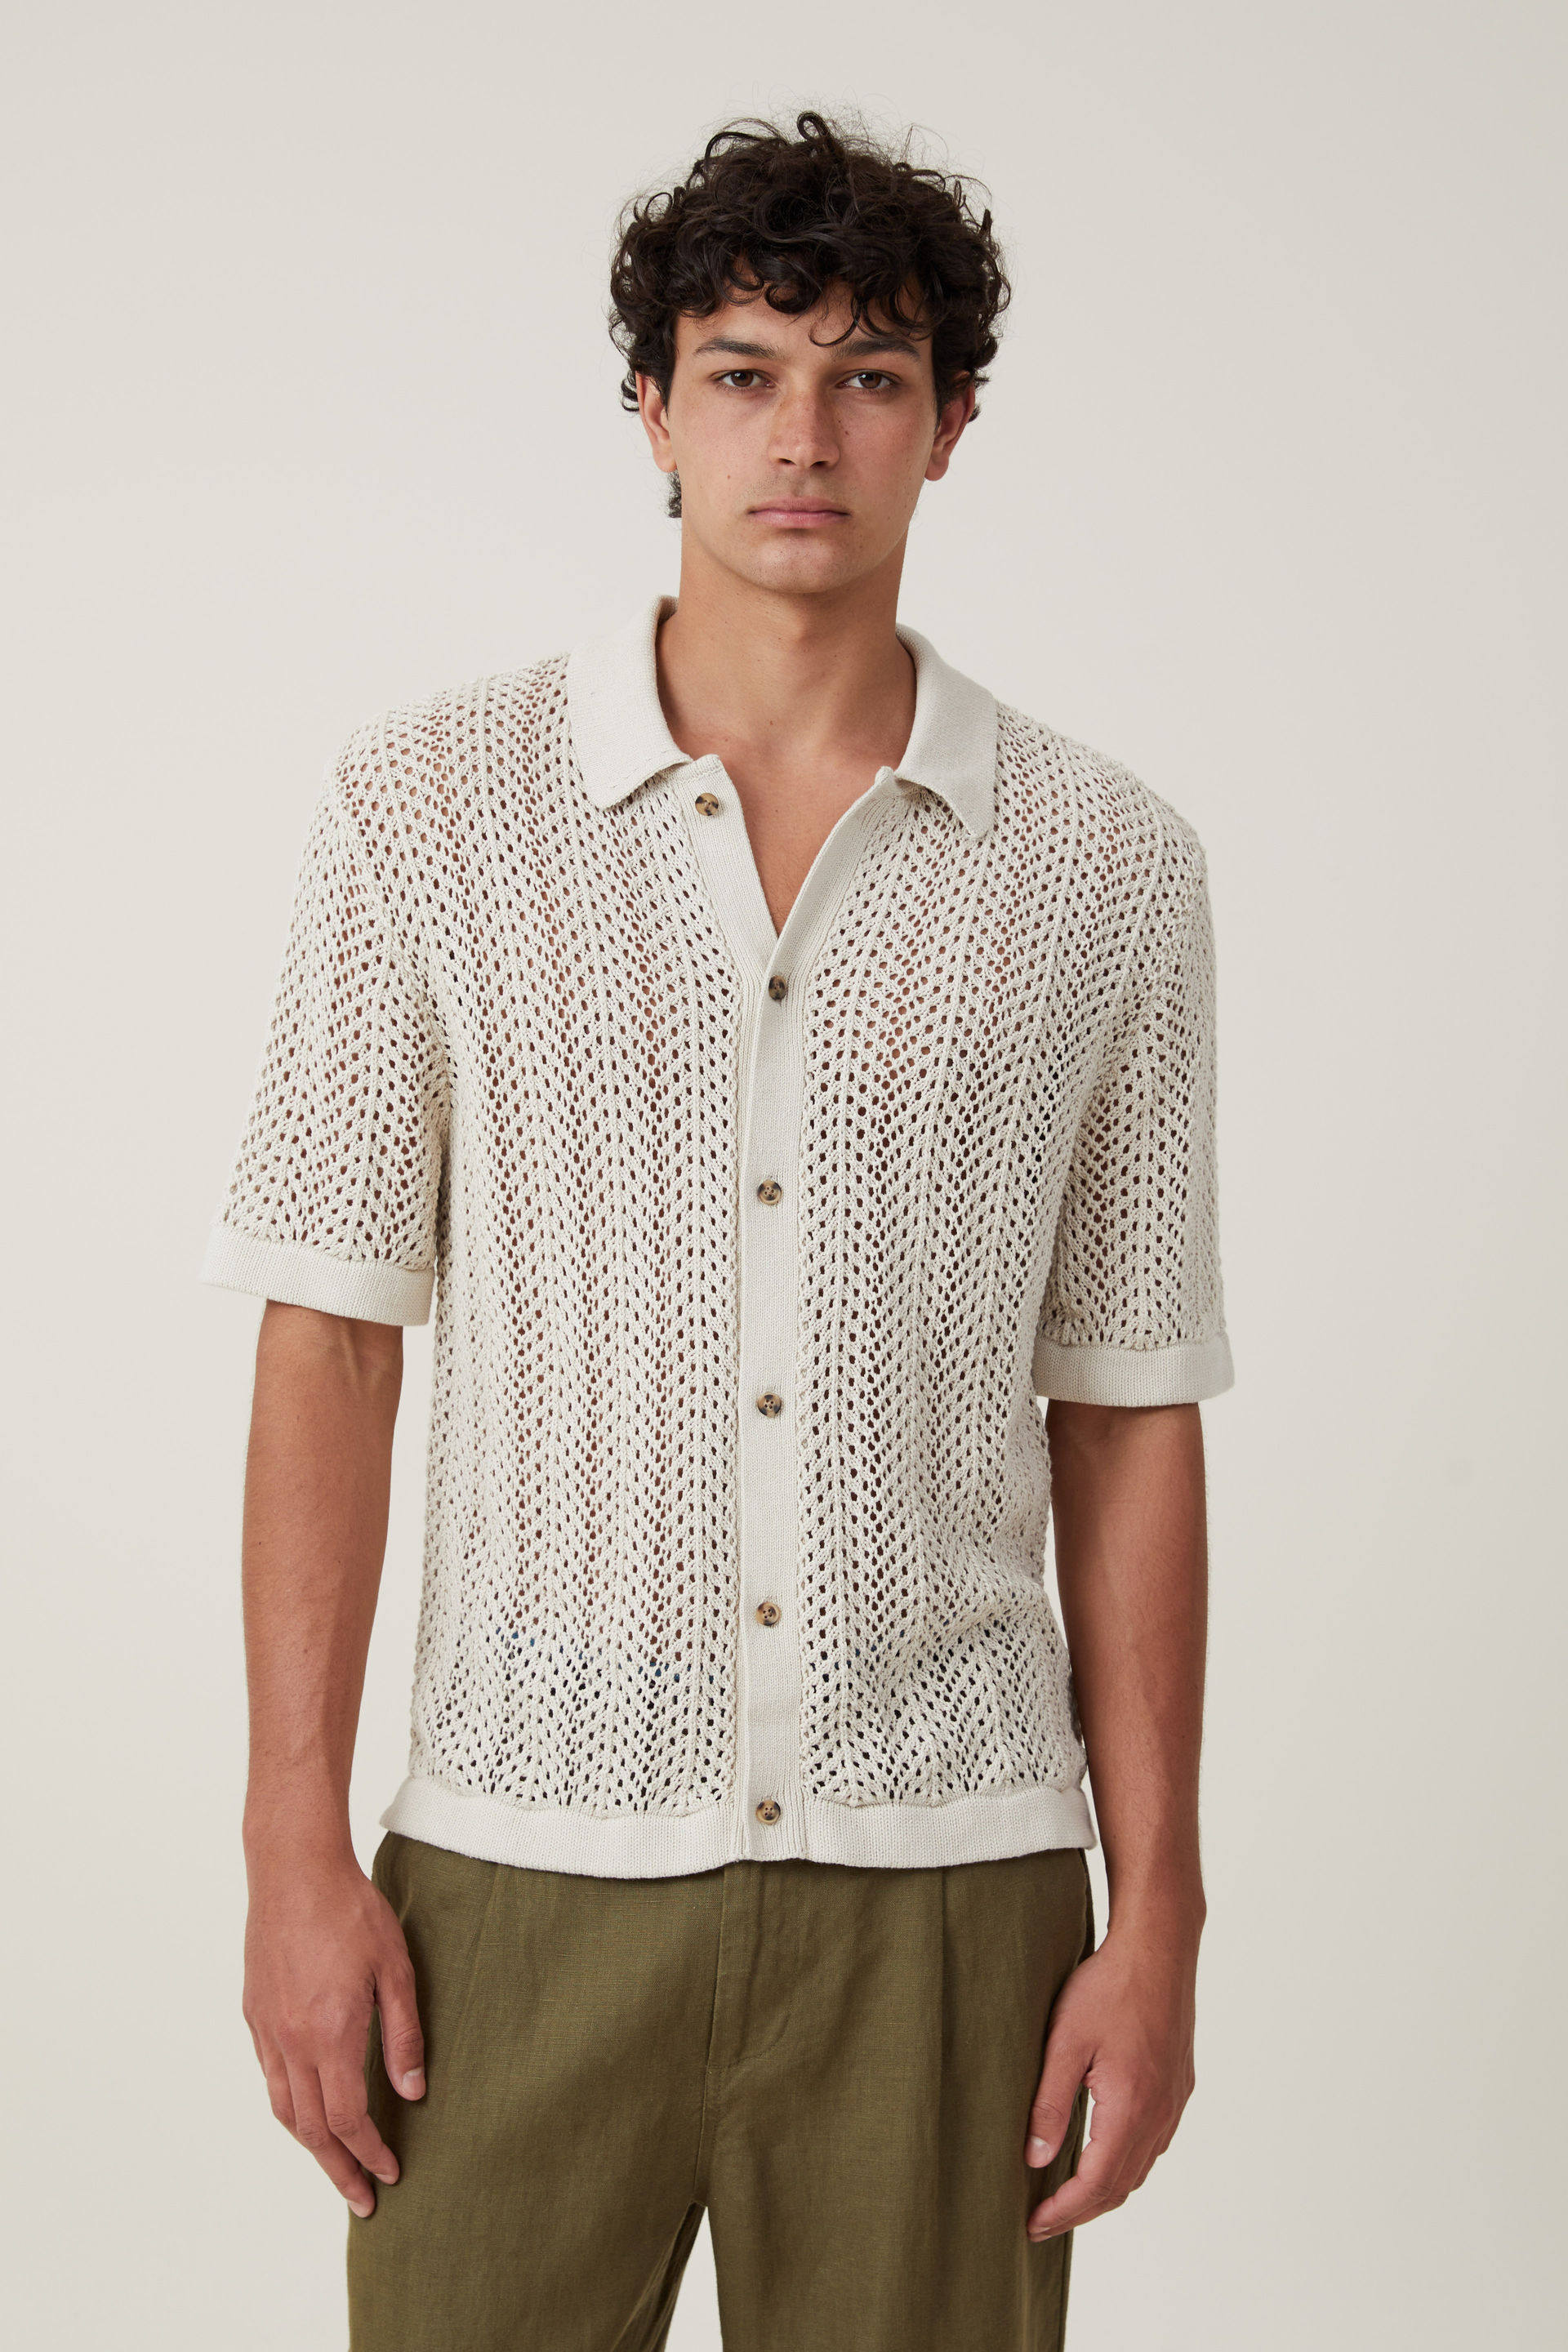 Cotton On Men - Pablo Short Sleeve Shirt - Bone